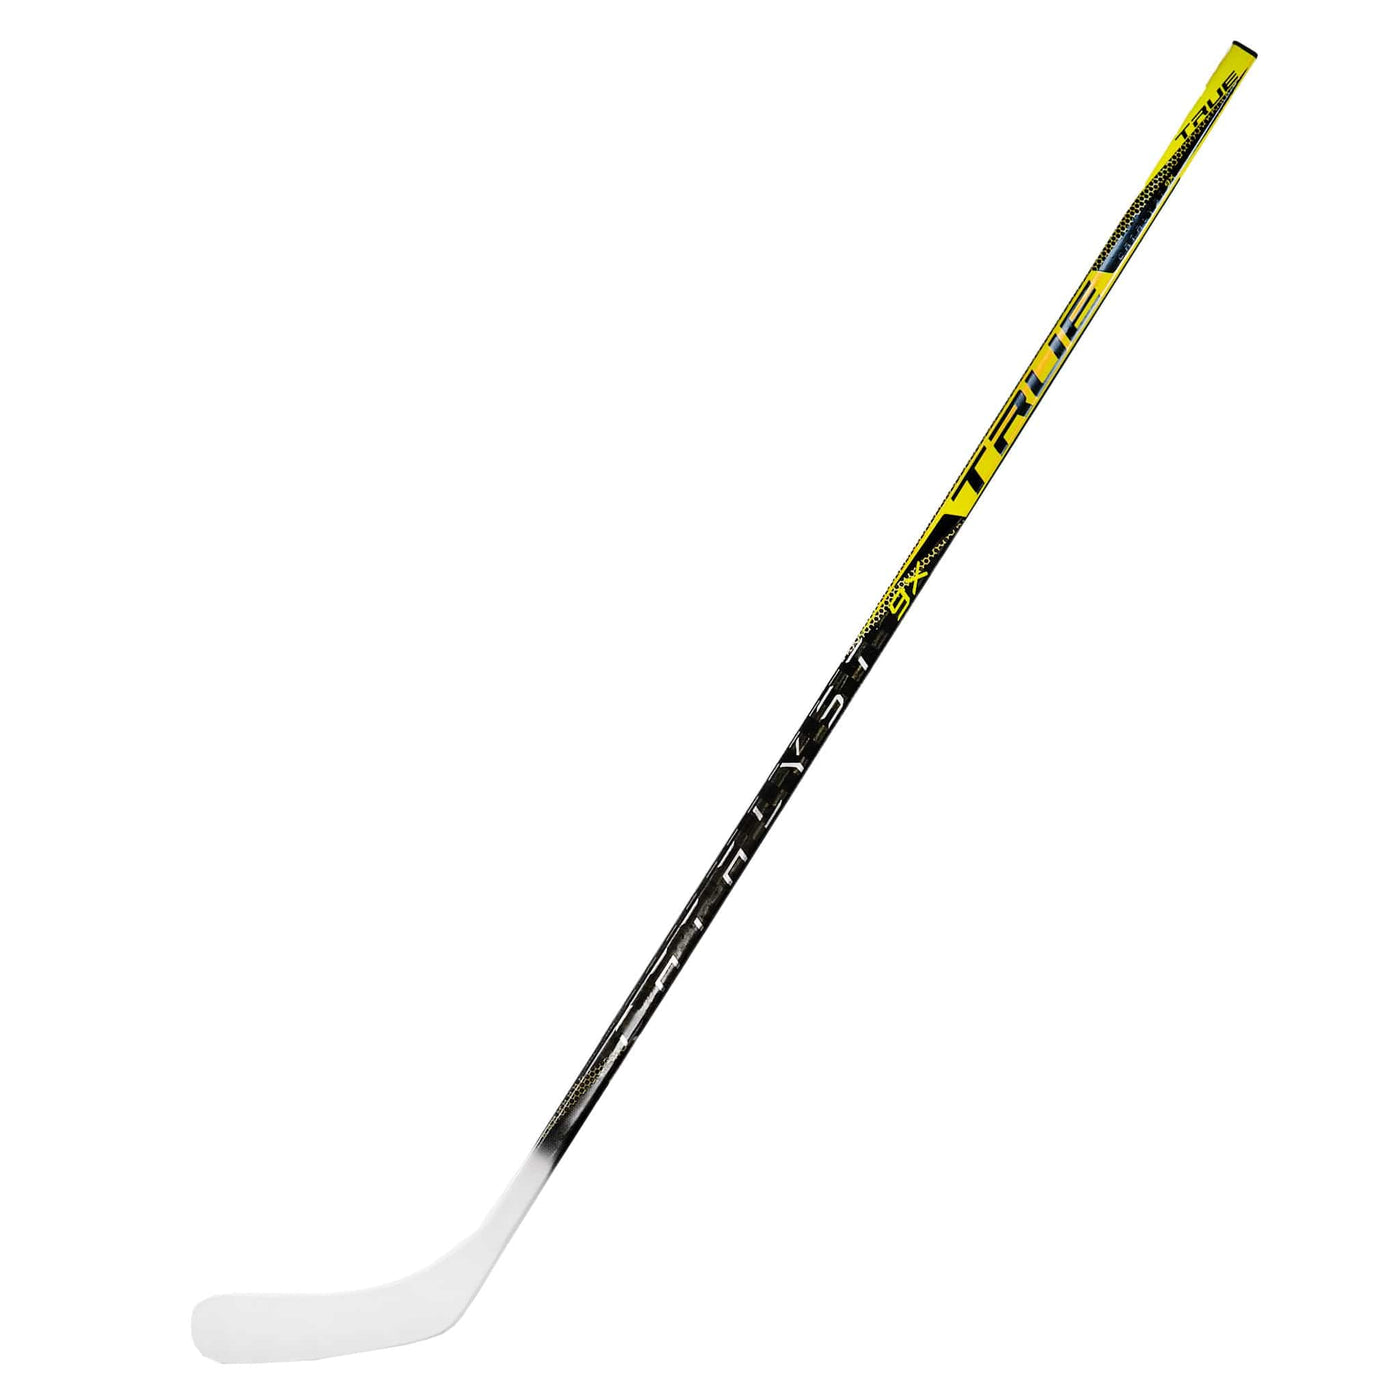 TRUE Catalyst 9X Pro Stock Senior Hockey Stick - Jeff Skinner - The Hockey Shop Source For Sports